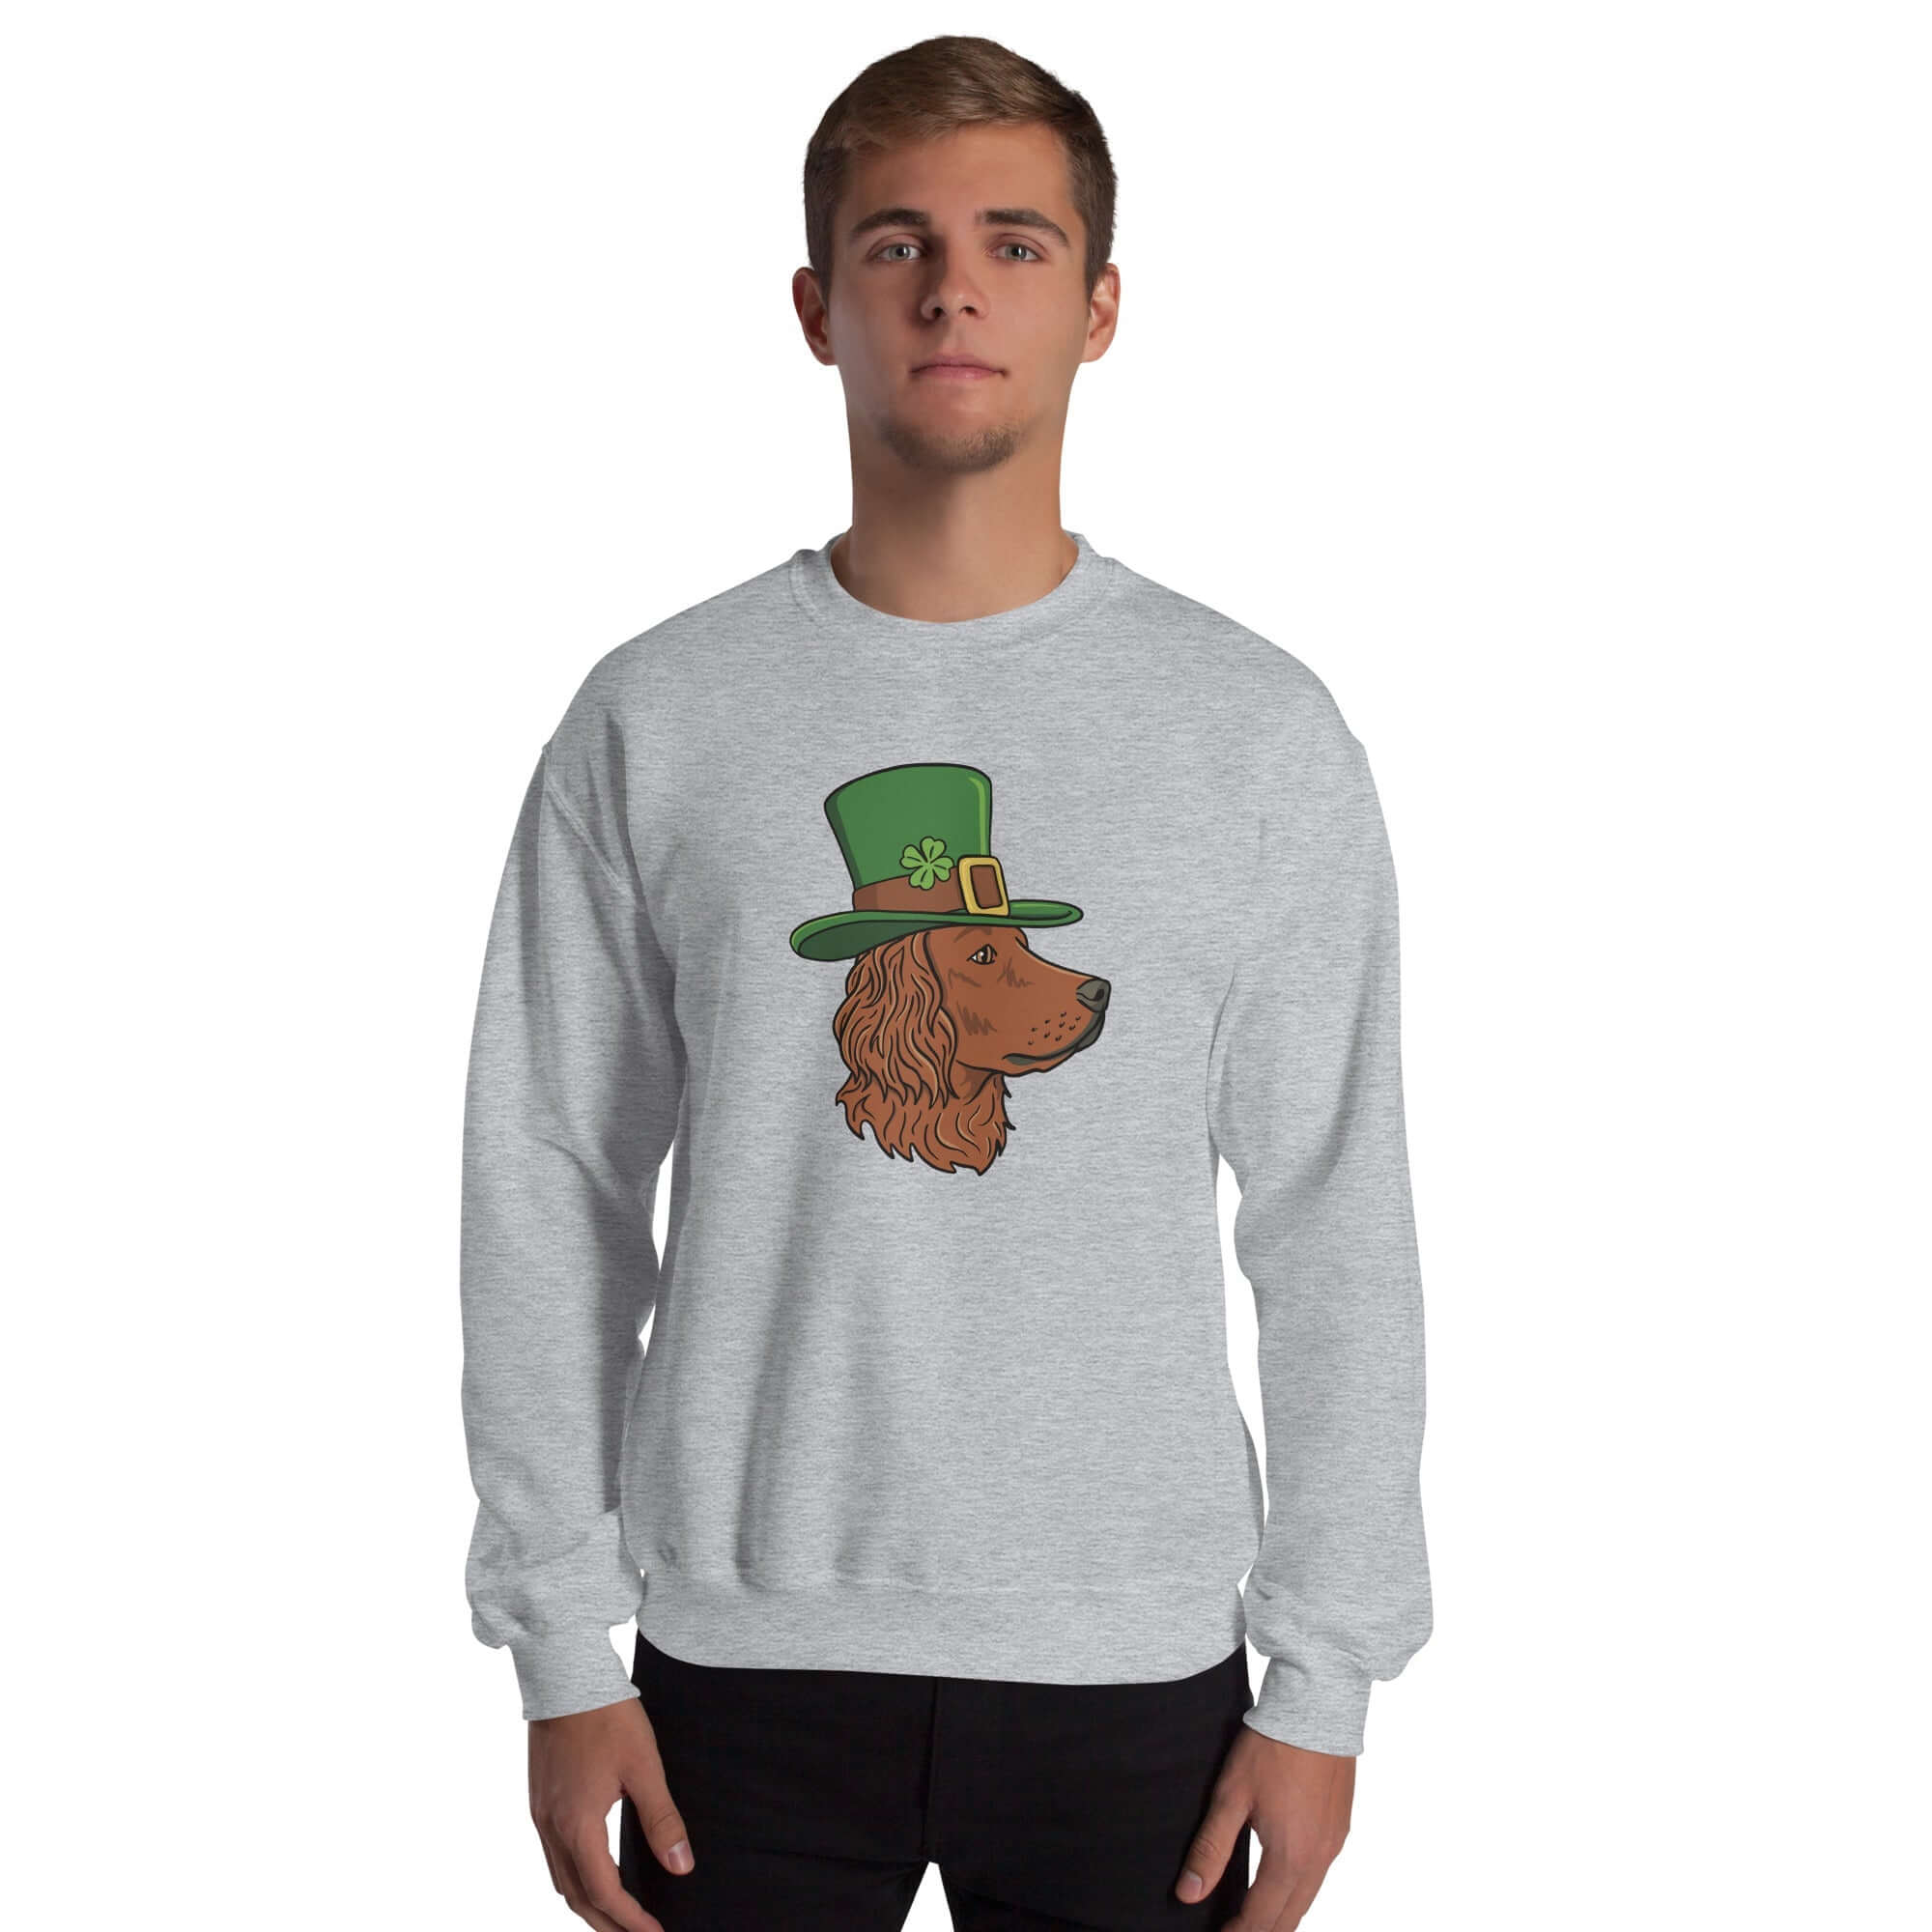 Irish Setter Crewneck Sweatshirt - TAILWAGS UNLIMITED